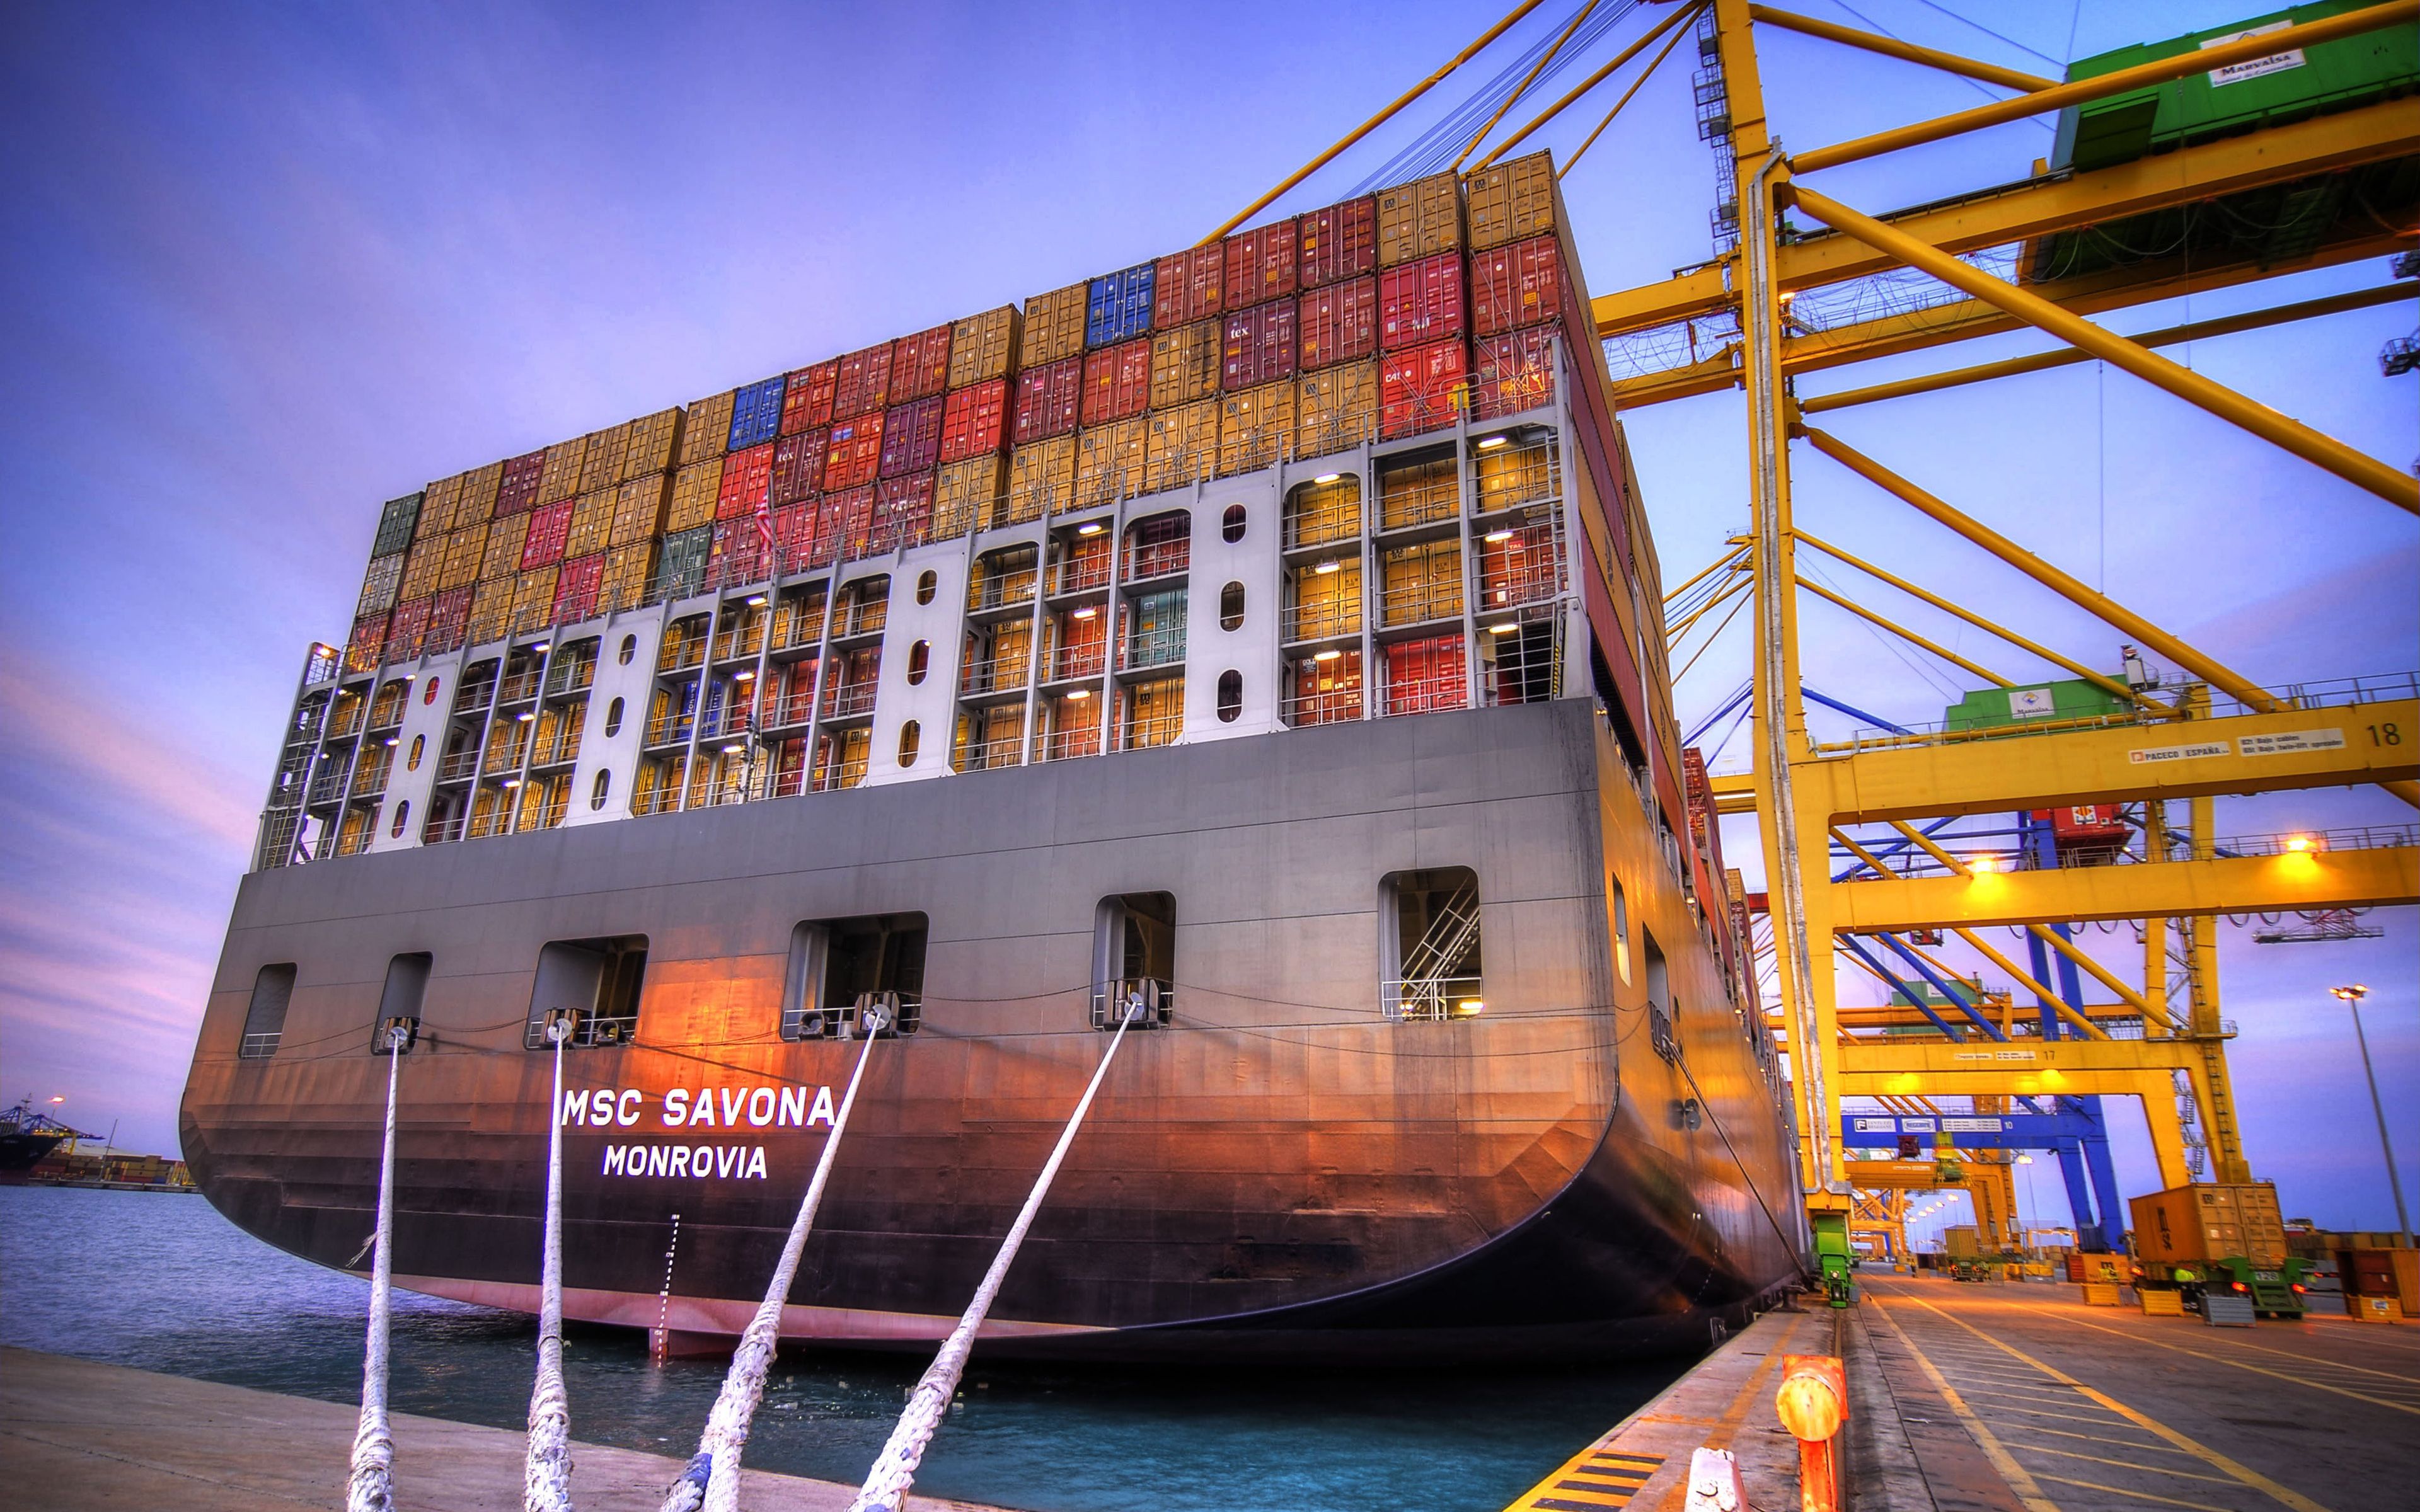 Download wallpaper MSC Savona, 4k, cargo ship, cargo transport